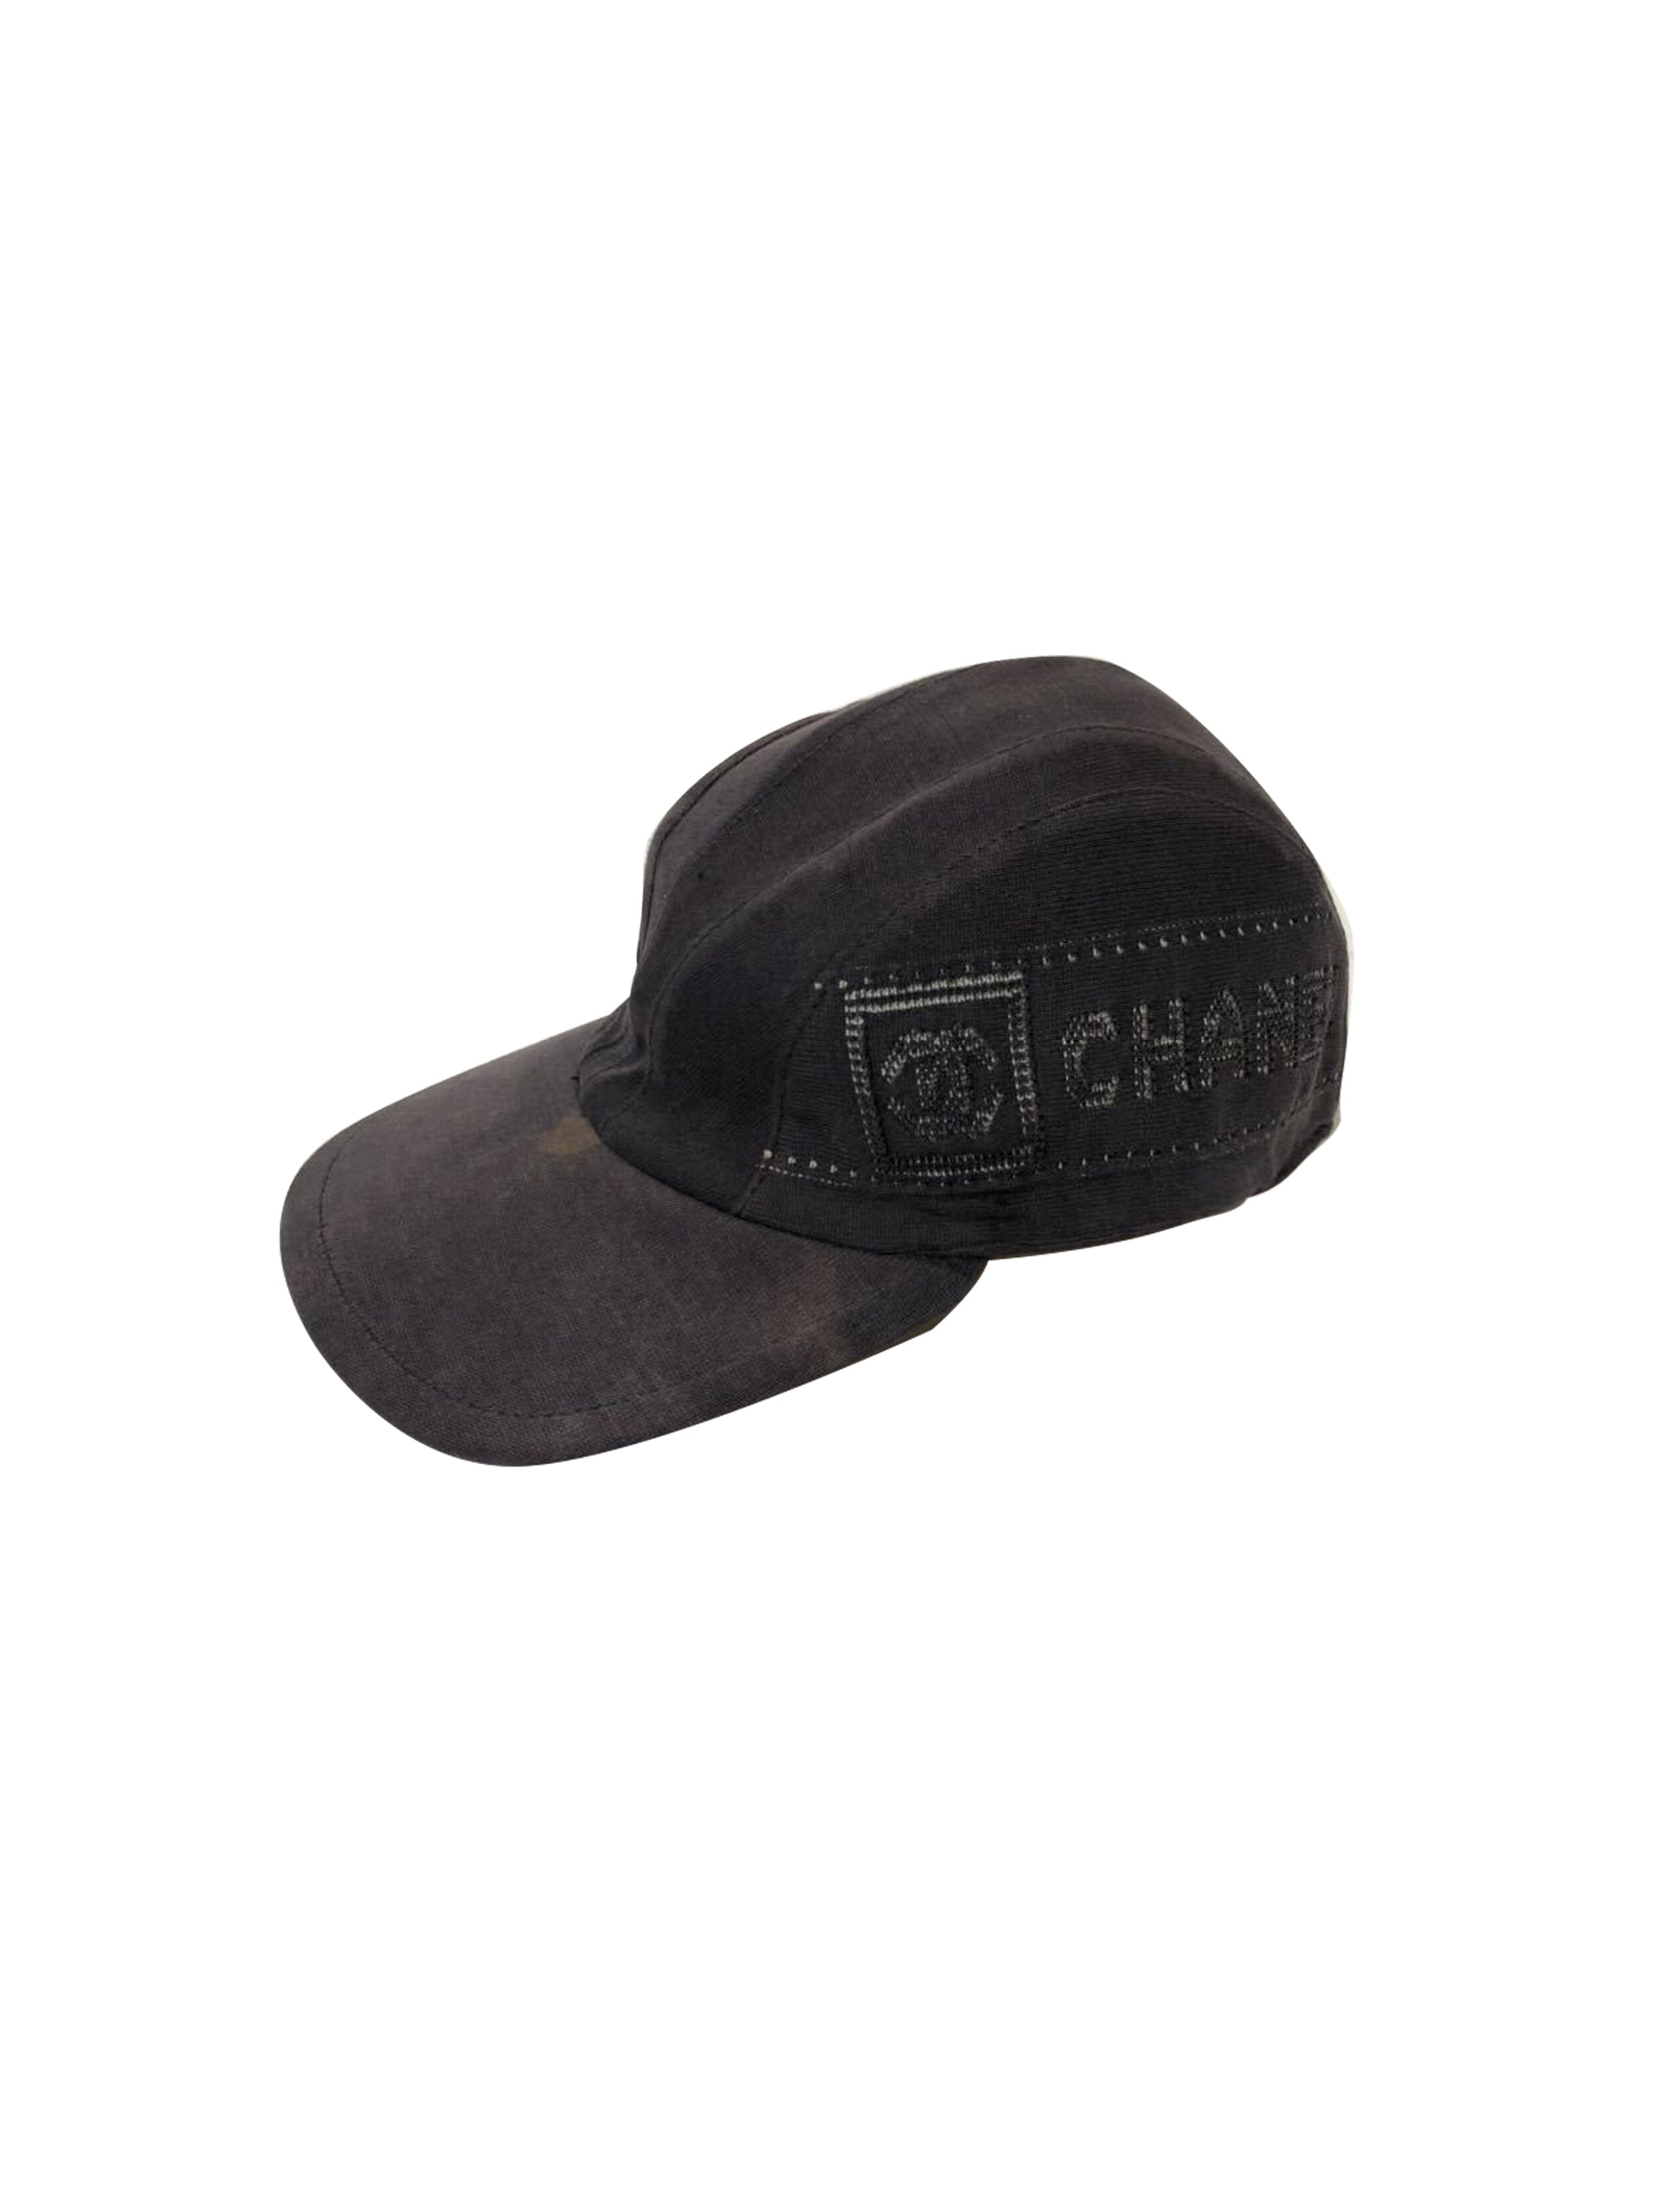 CHANEL, Accessories, Chanel Black Cotton Cc Logo Baseball Cap Hat